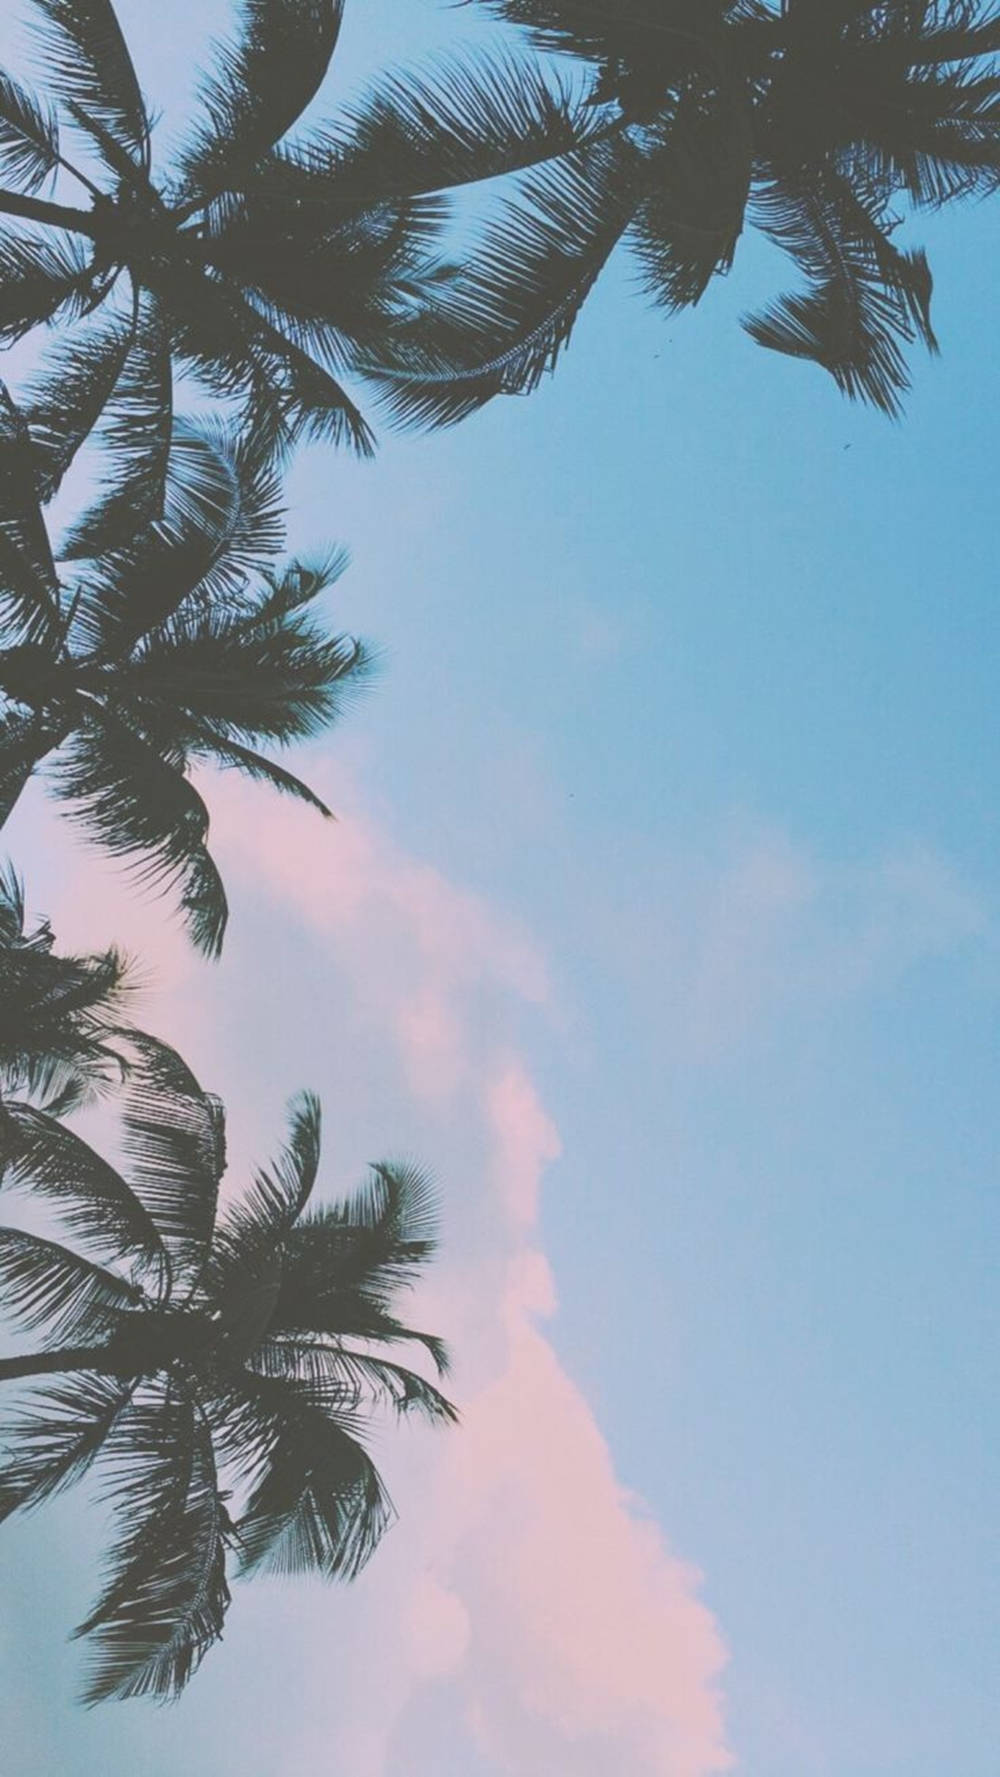 Pastel Ipad Palm Tree Silhouettes